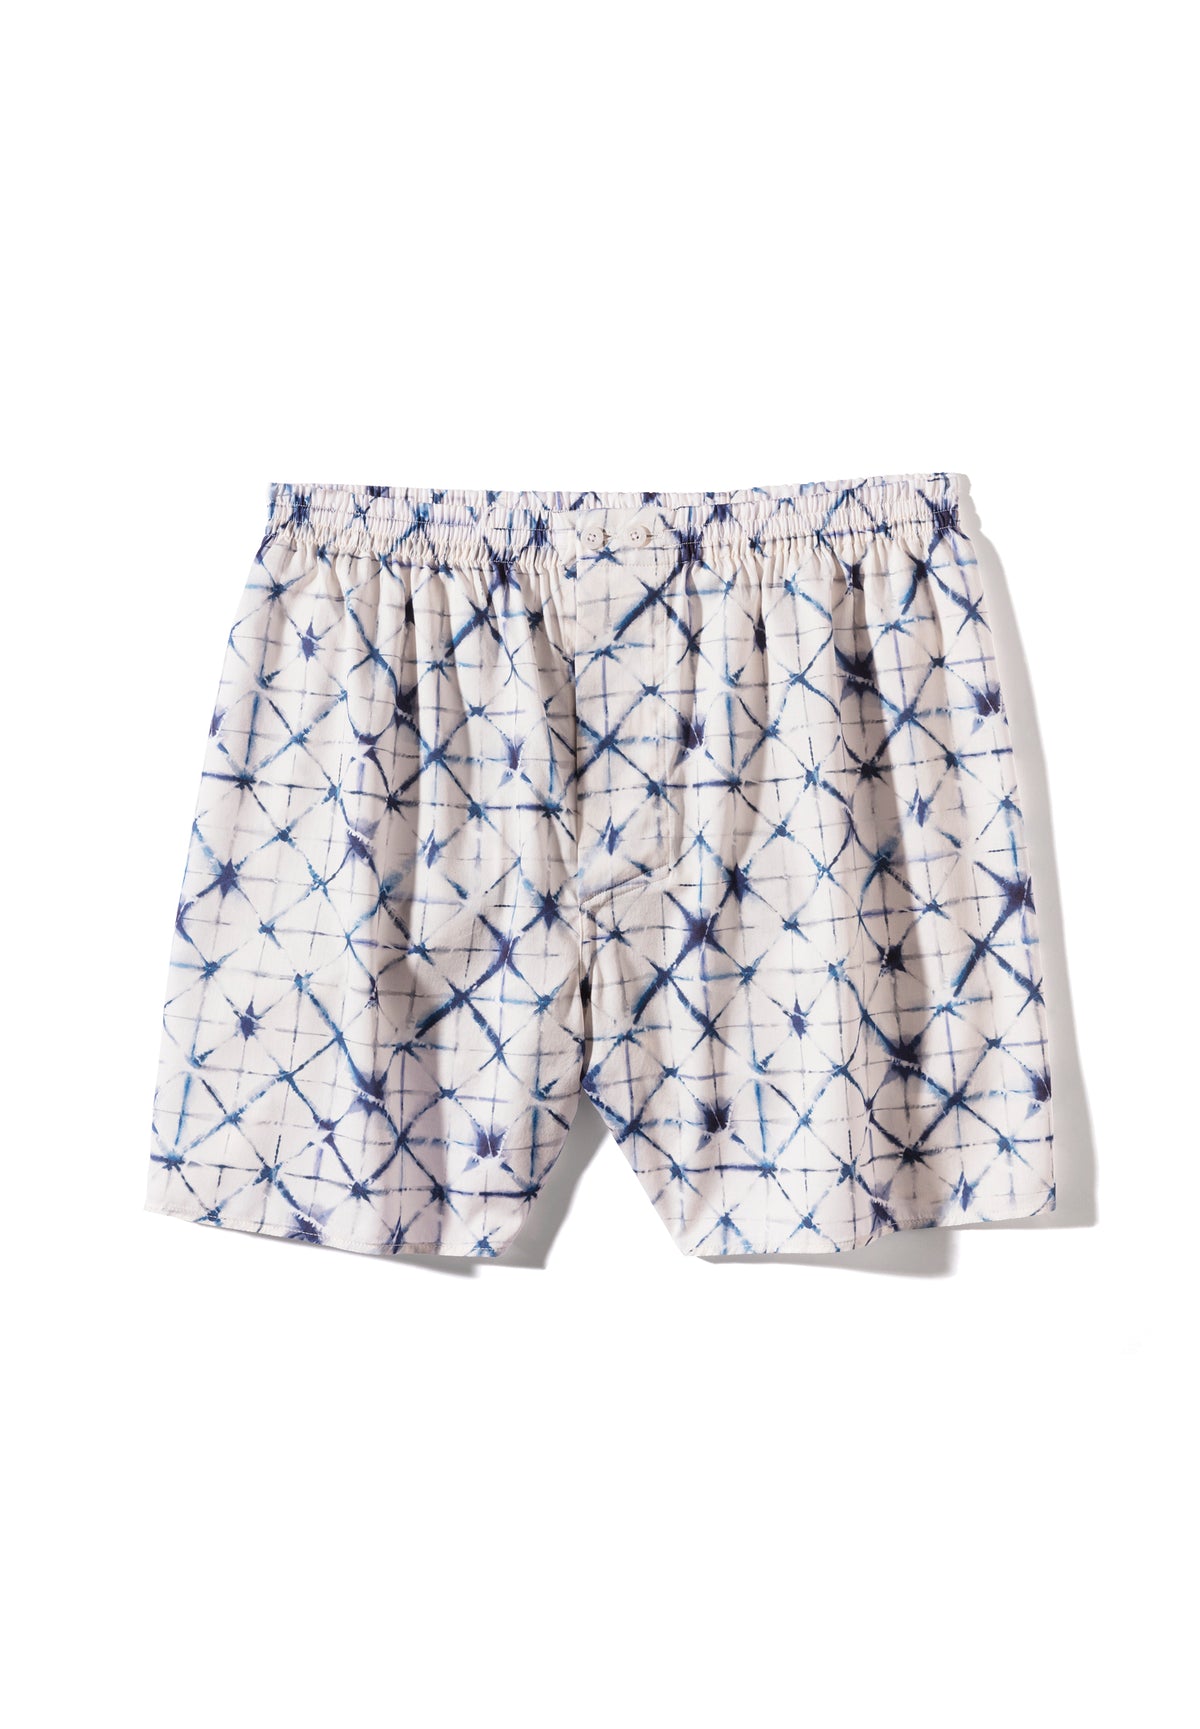 Cotton Sateen Print | Boxer Shorts - geo-batic blue